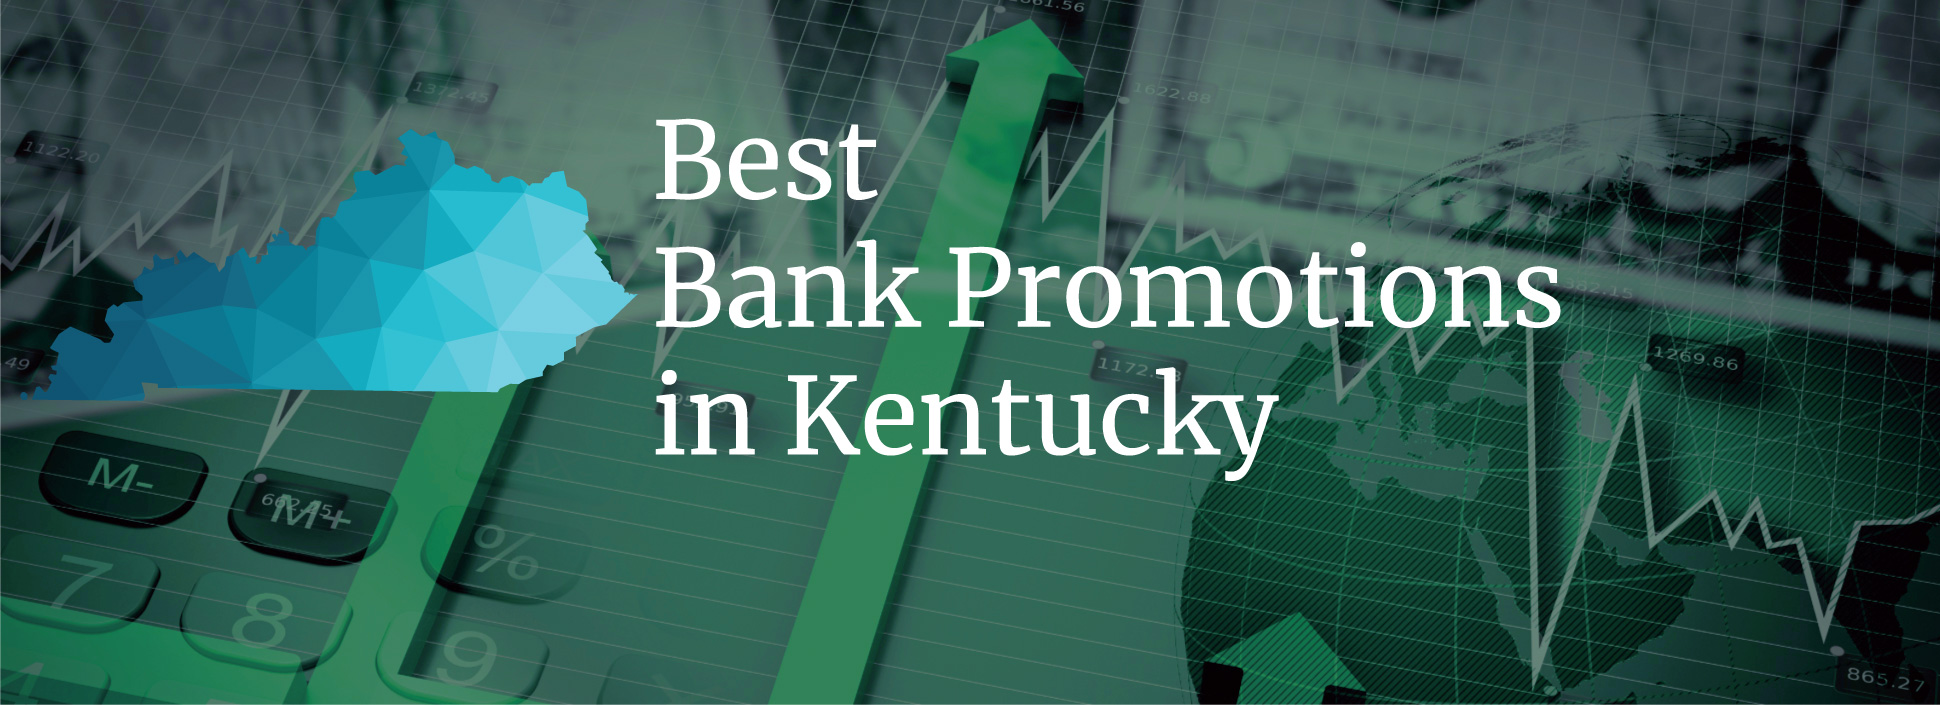 Best Bank Promotions in Kentucky